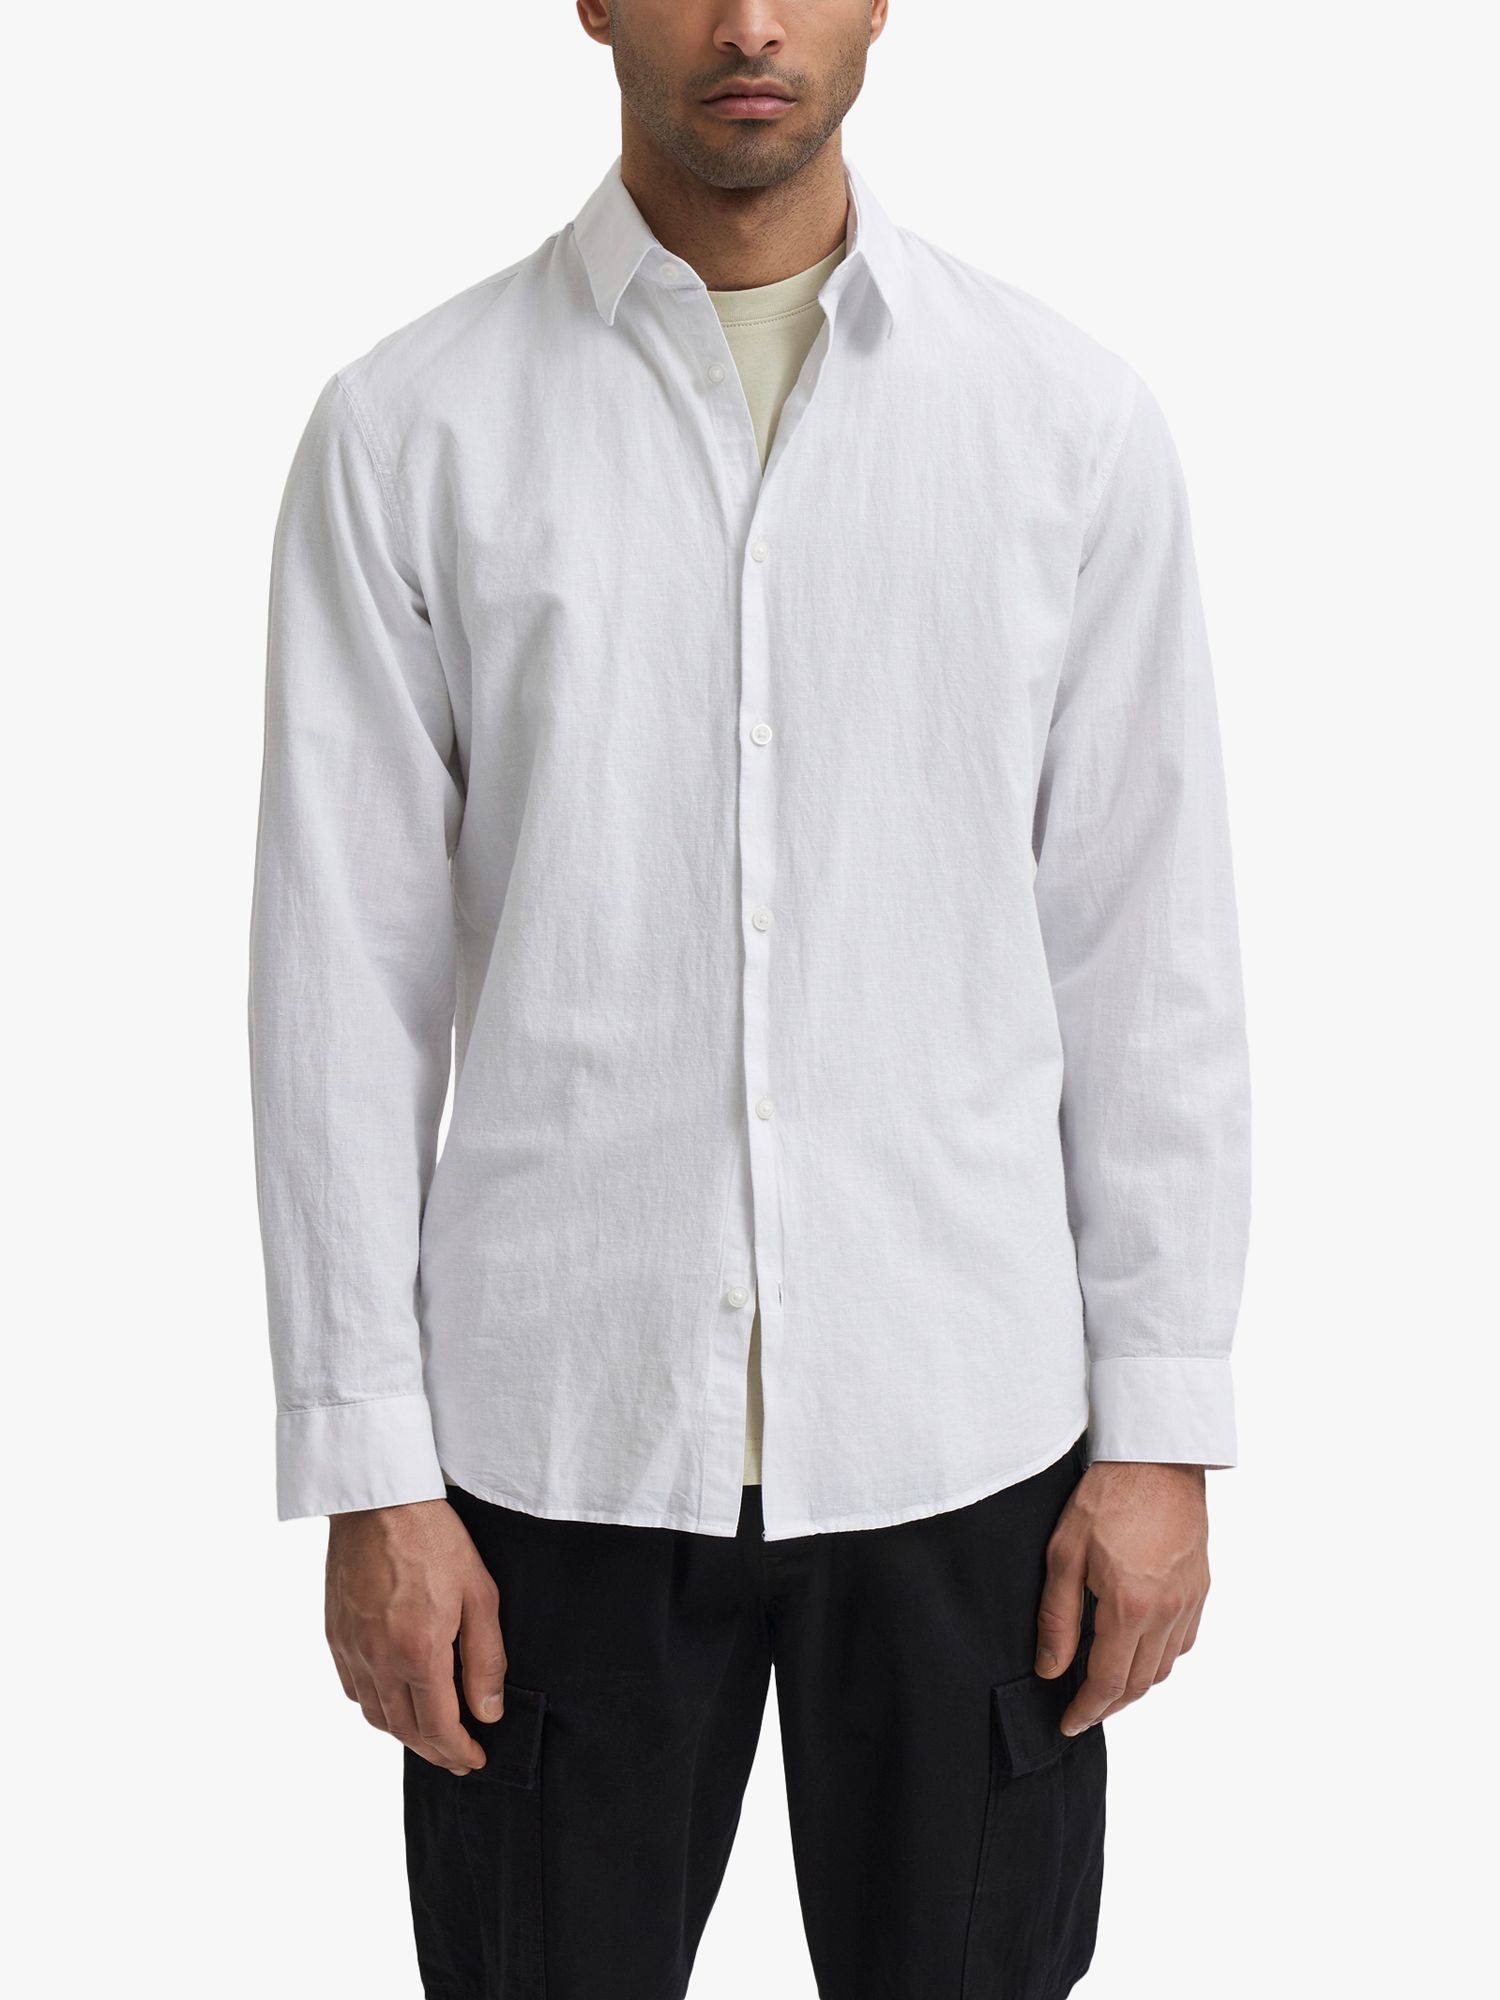 SELECTED HOMME Cotton Linen Blend Shirt, White at John Lewis & Partners